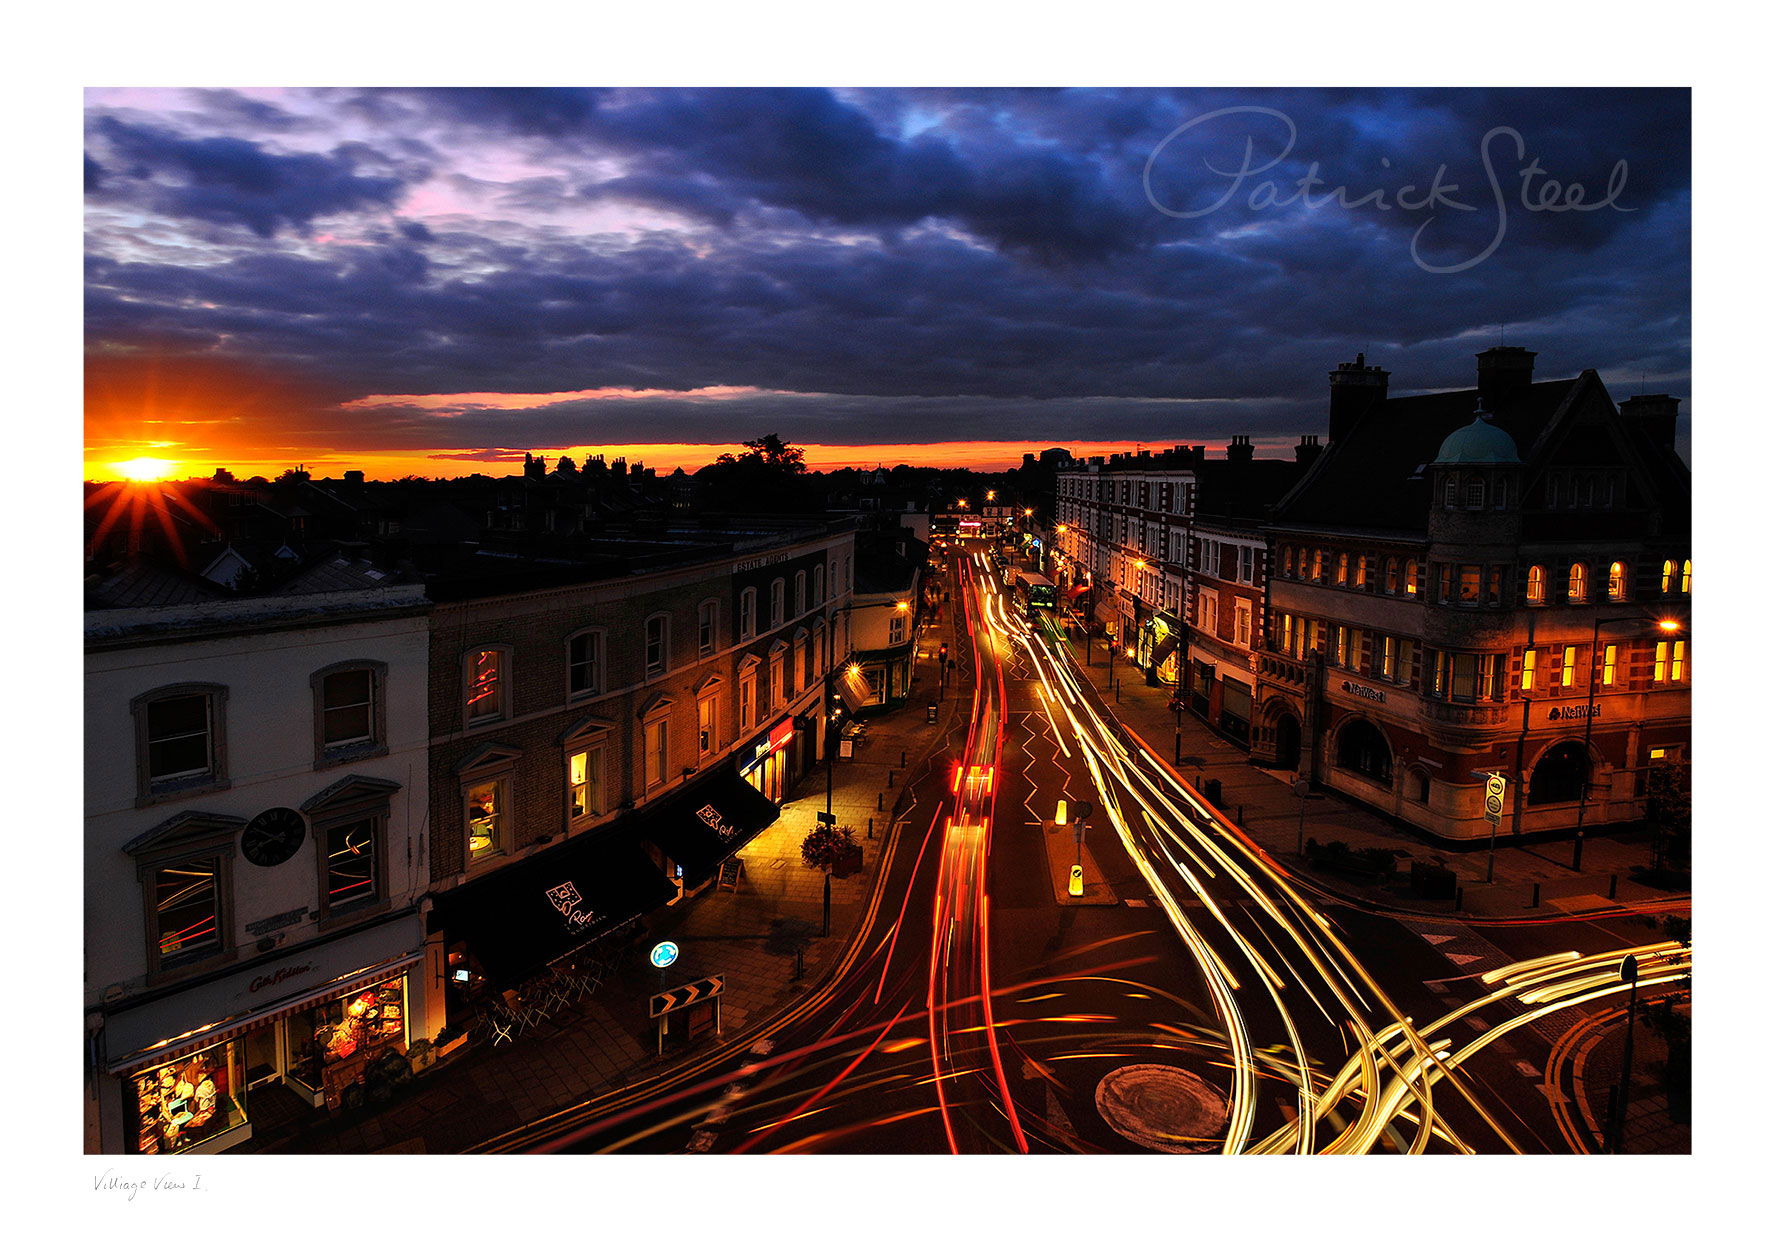 Photograph of Wimbledon Village High Street by Patrick Steel